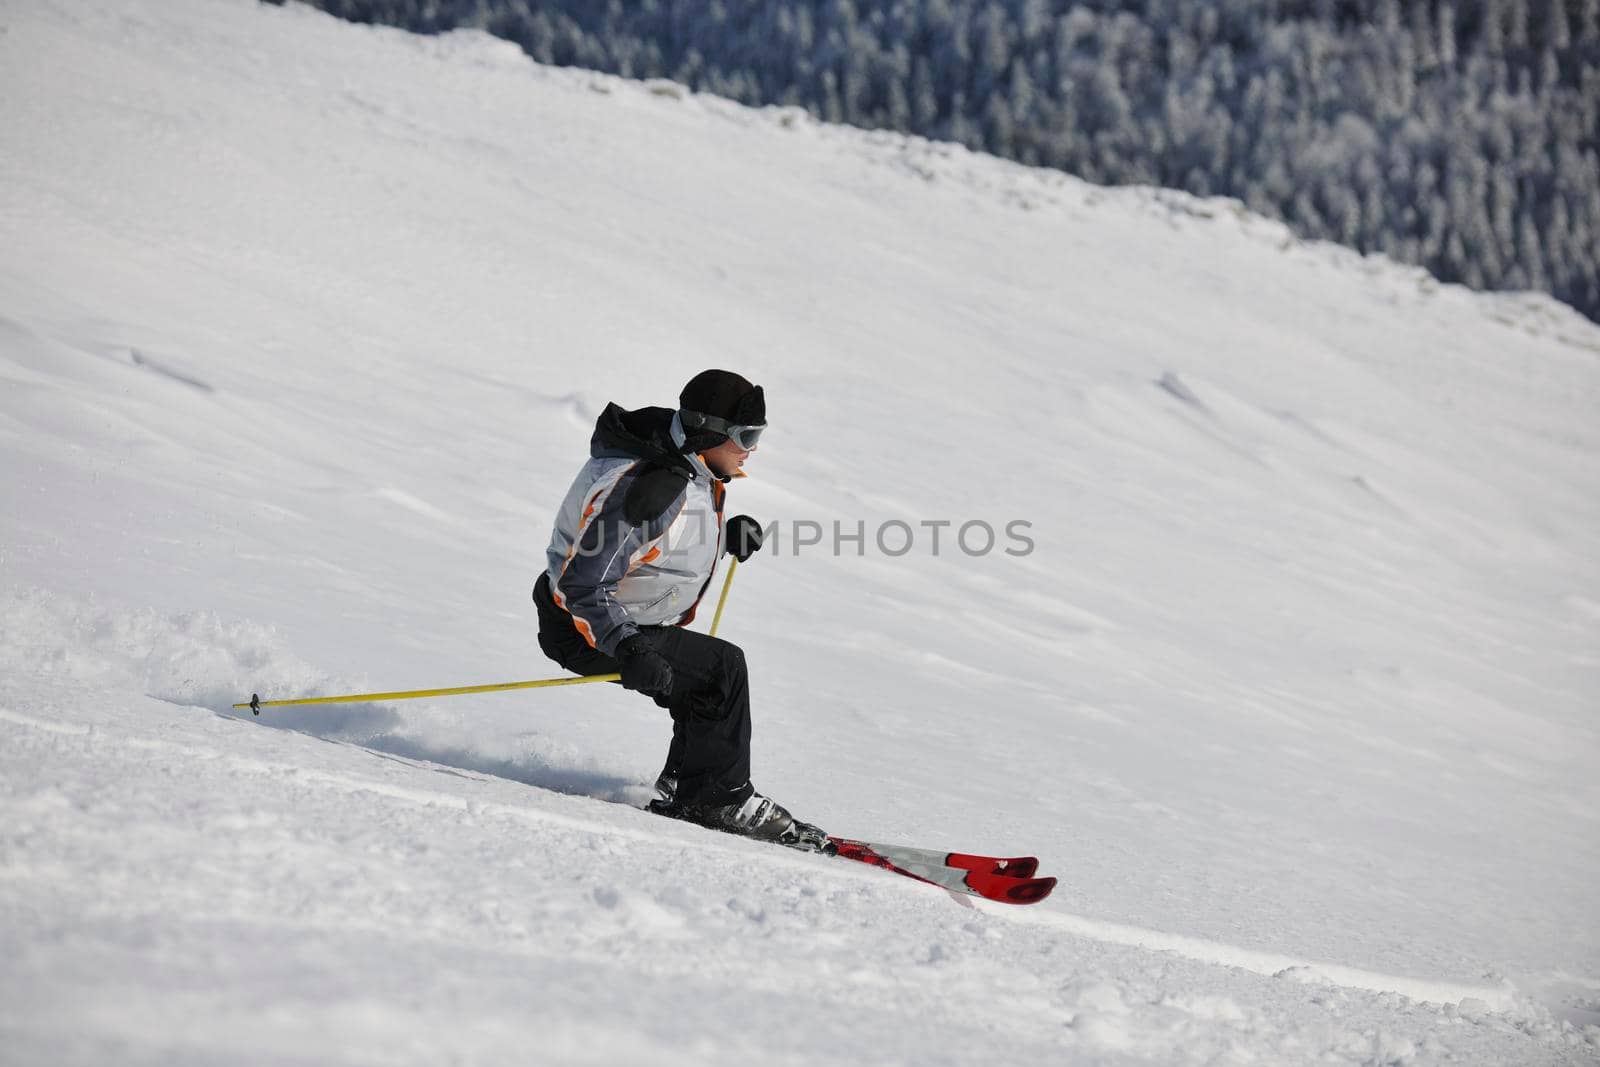 skier free ride  by dotshock